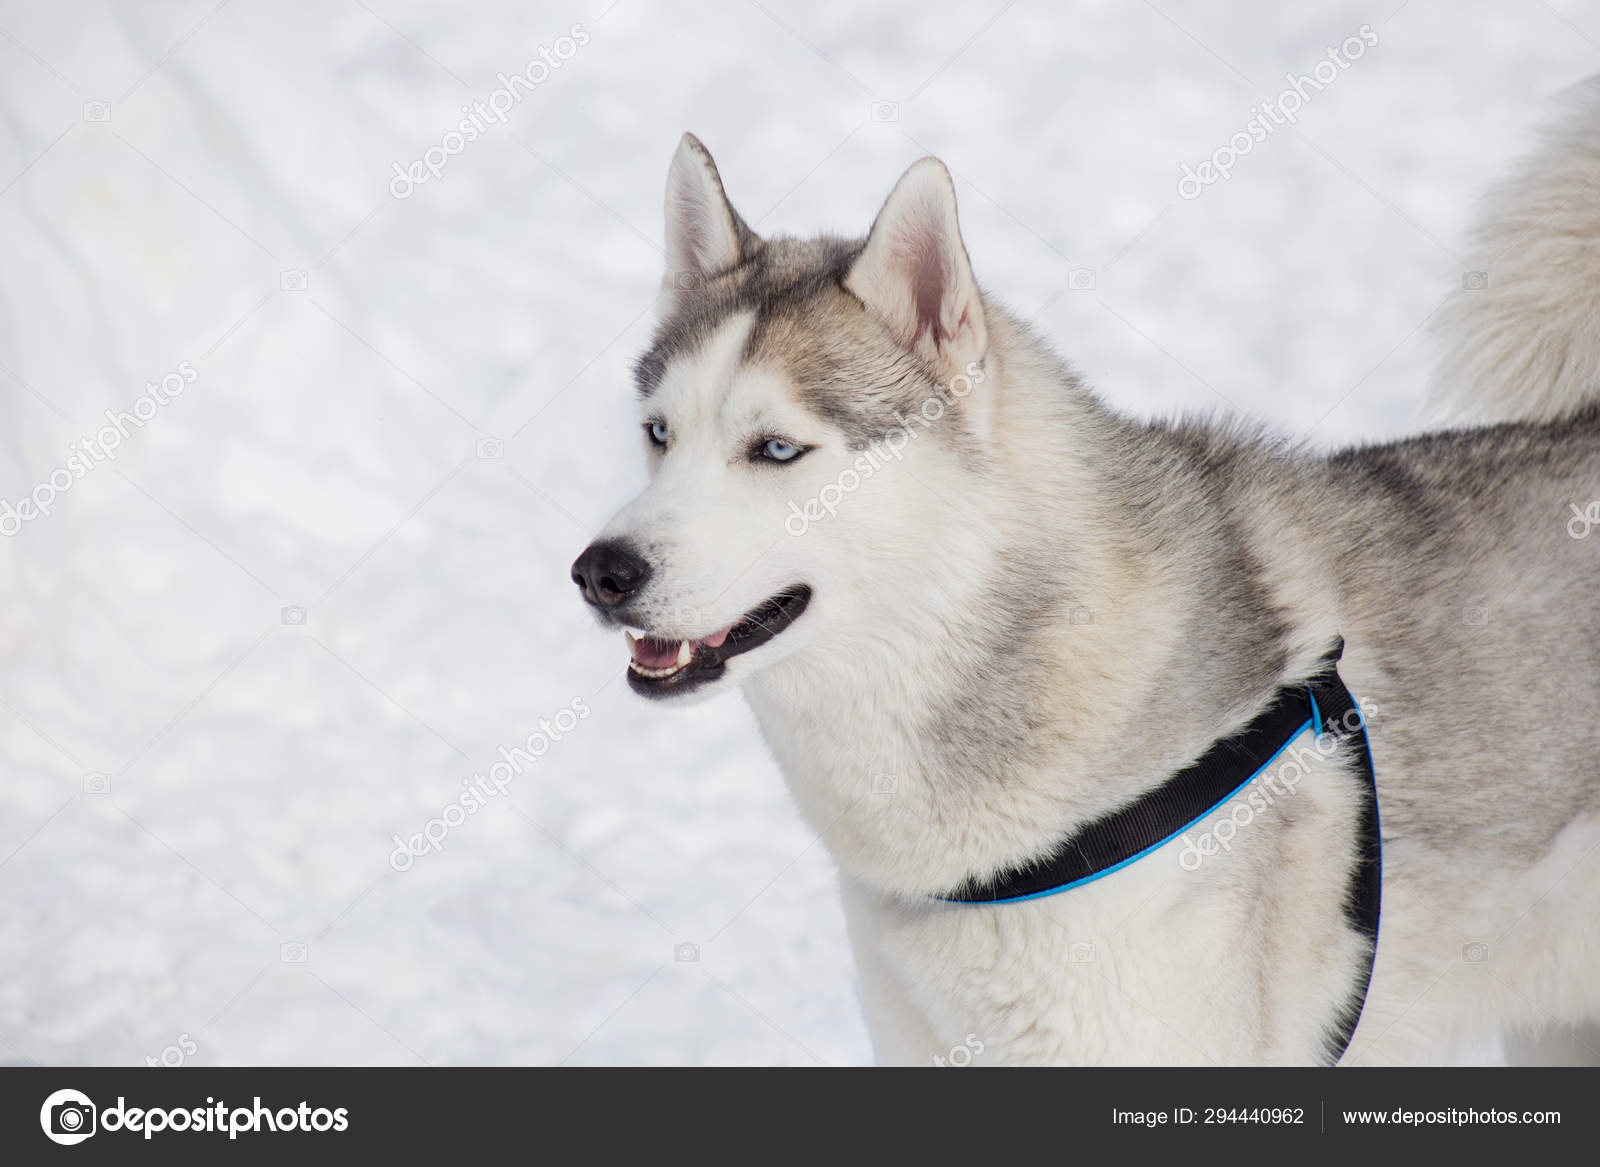 Cute Siberian Husky Is Standing On A White Snow Pet Animals Stock Photo C Sergeytikhomirov 294440962